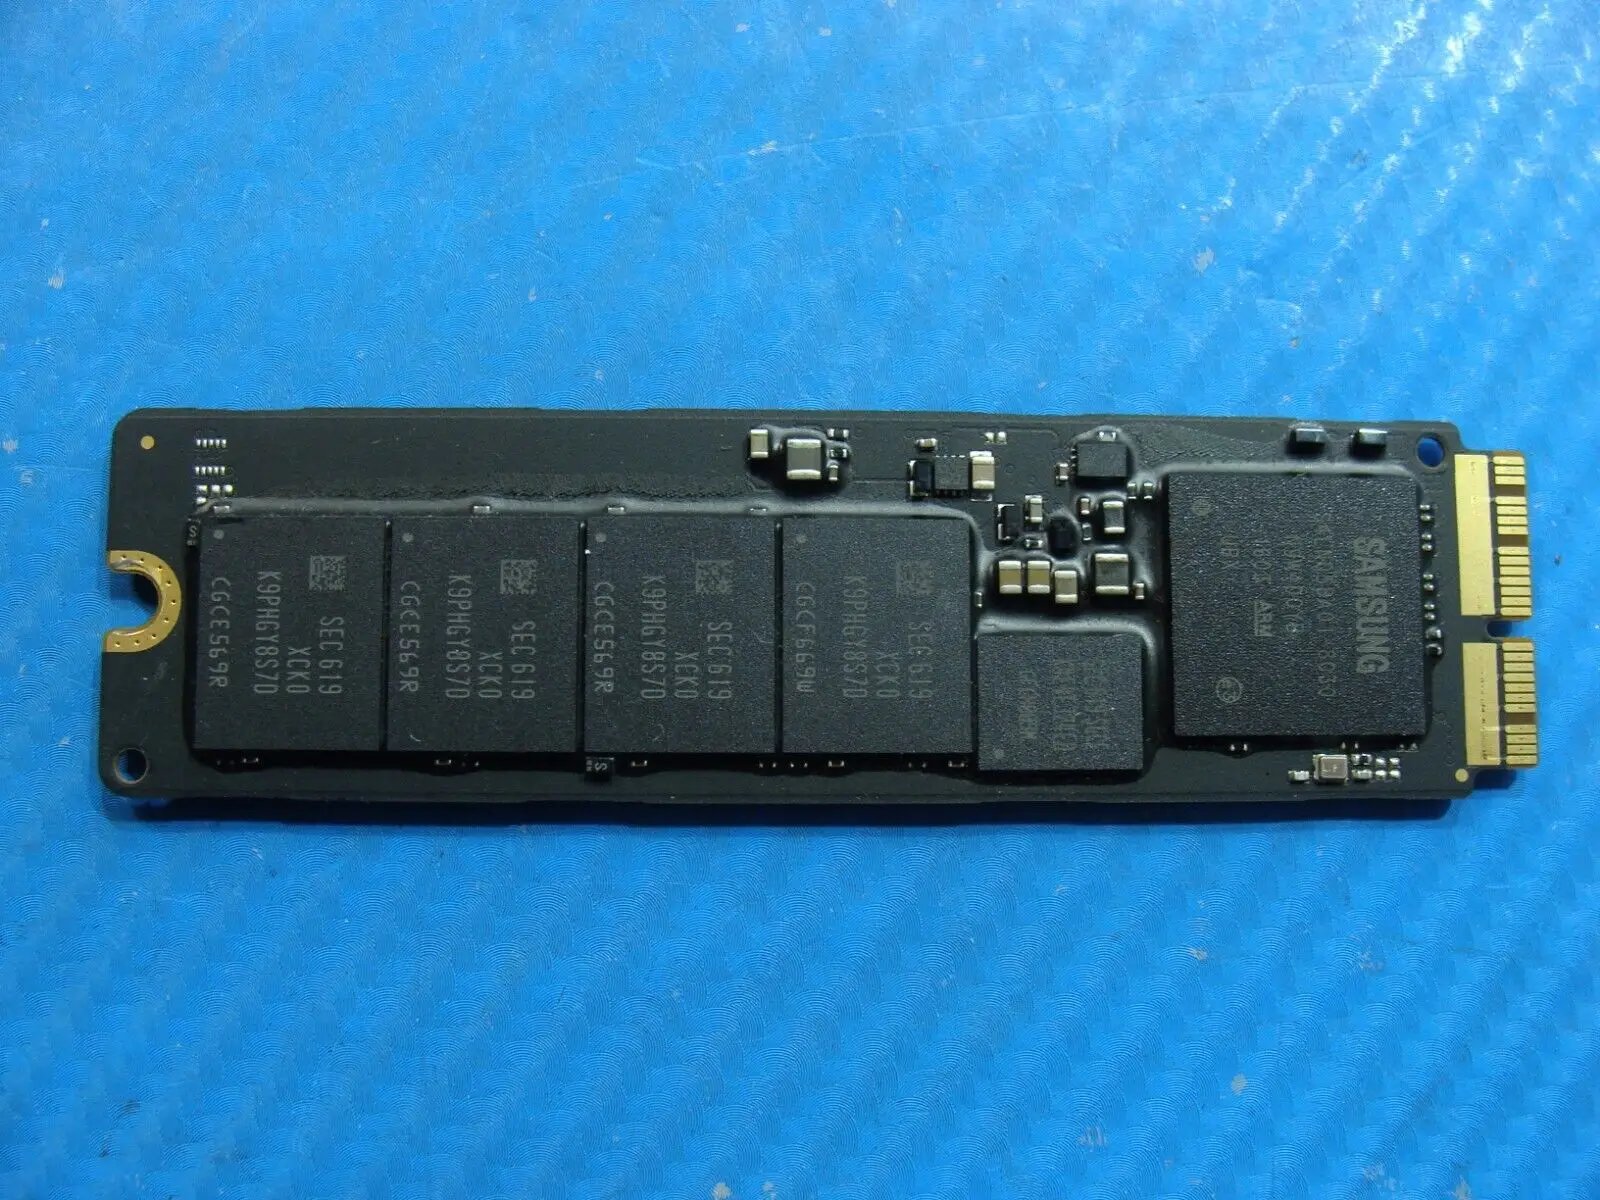 MacBook Pro A1398 Samsung 512Gb SSD Solid State Drive MZ-JPV5120/0A4 655-1859H